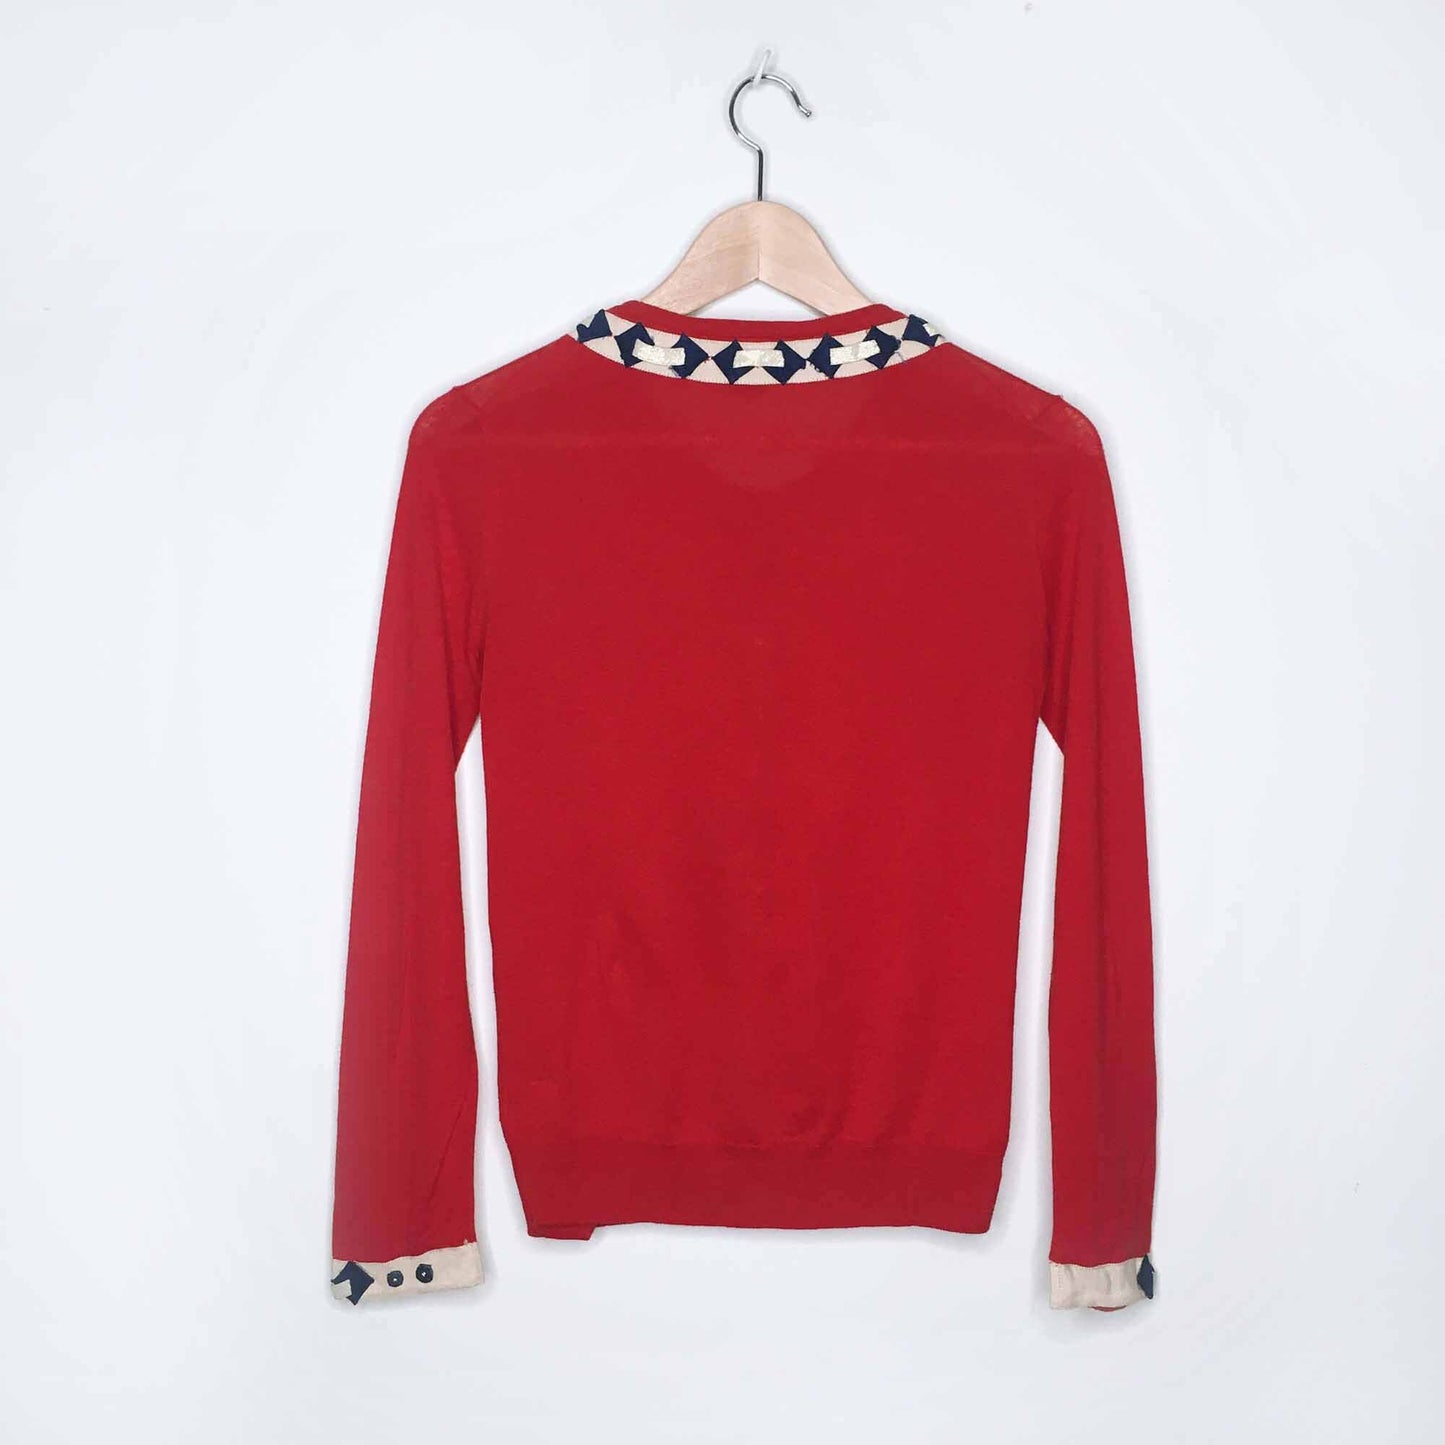 Marc Jacobs embellished trim cardigan sweater - size xs